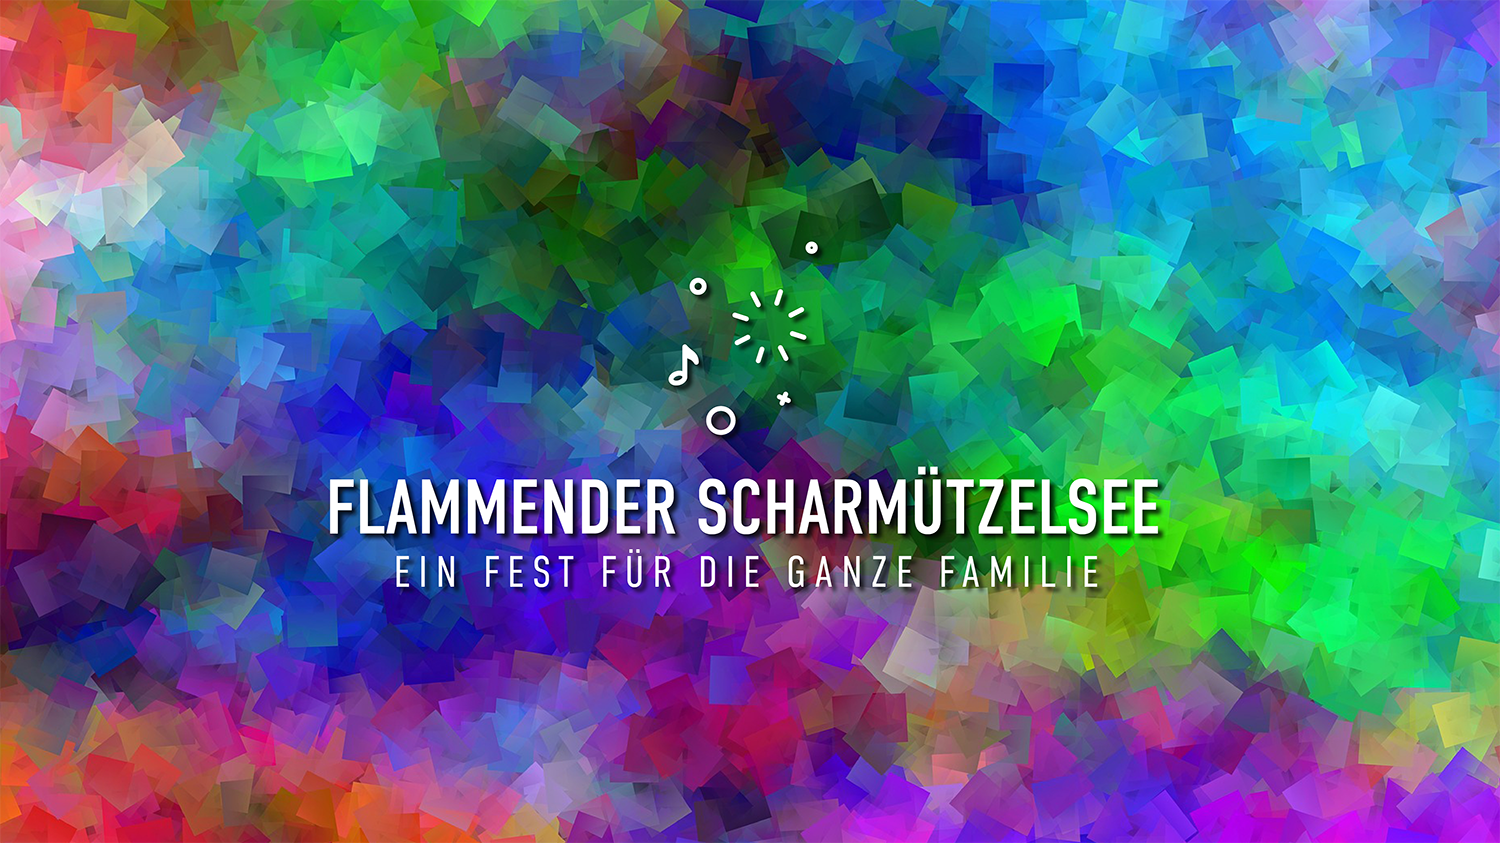 (c) Flammender-scharmuetzelsee.de